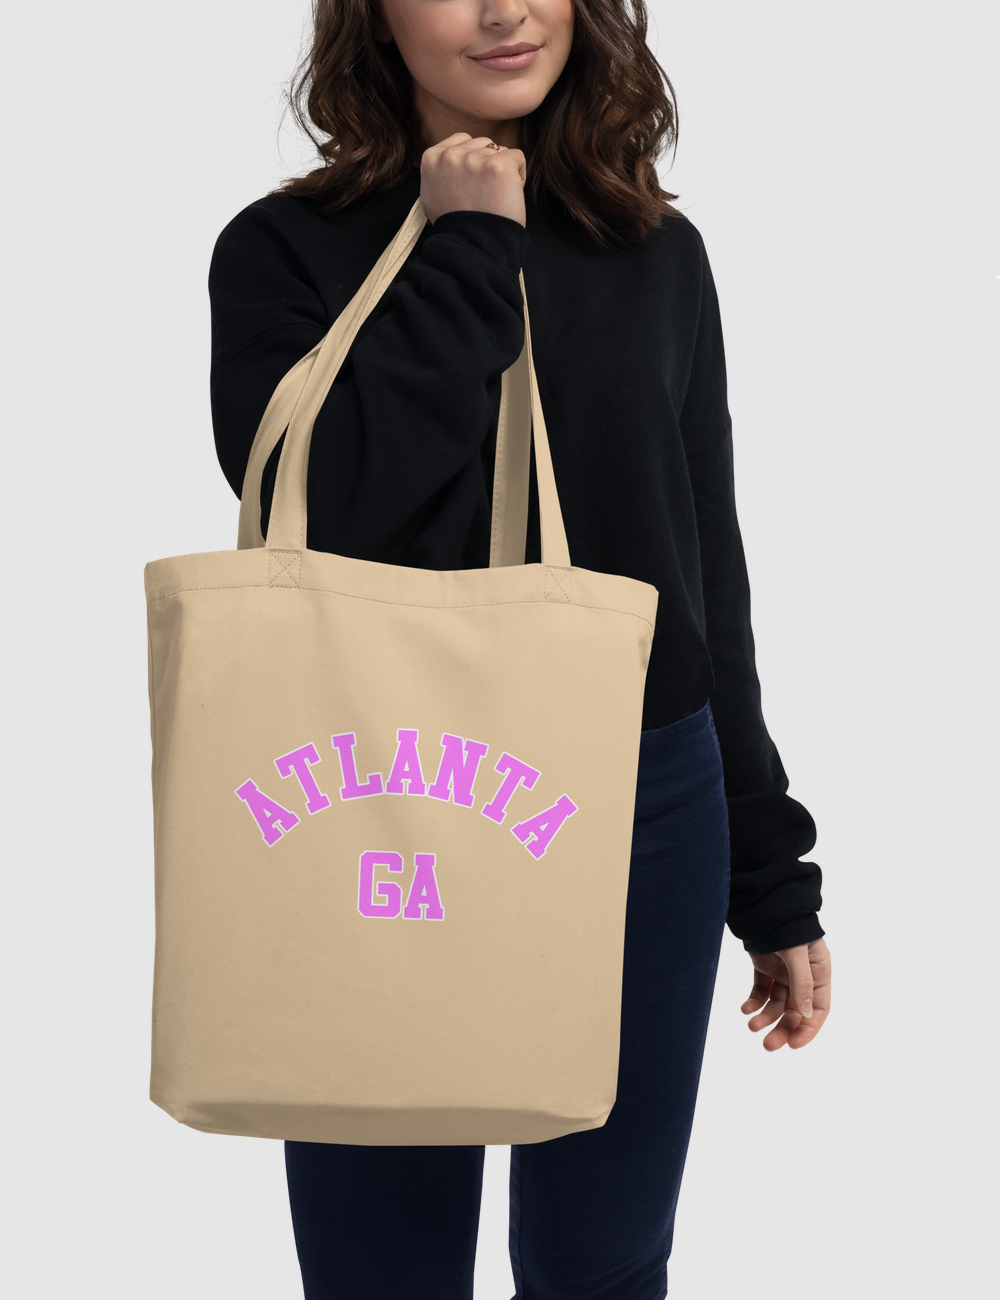 Hawt Pink Atlanta GA Eco-Friendly Tote Bag OniTakai